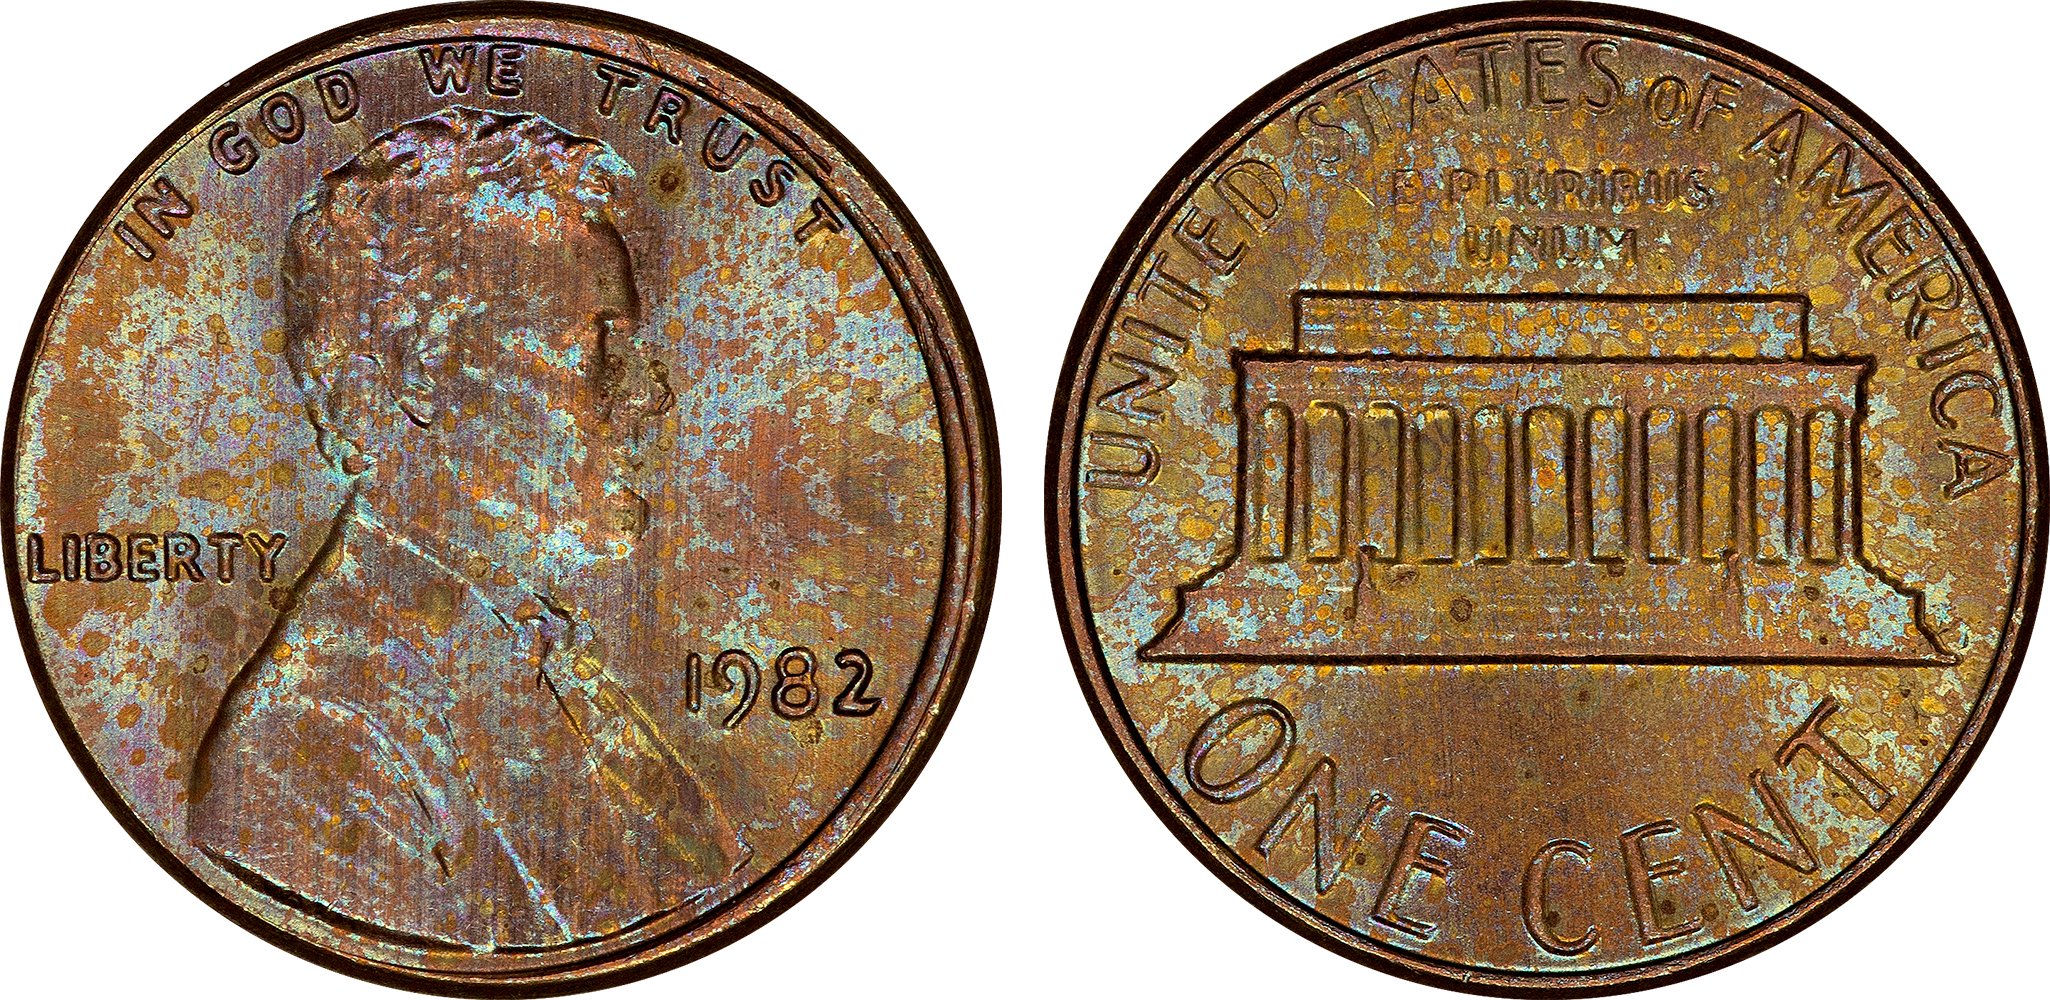 1982 (Copper - LG Date) - Lincoln Cent.jpg